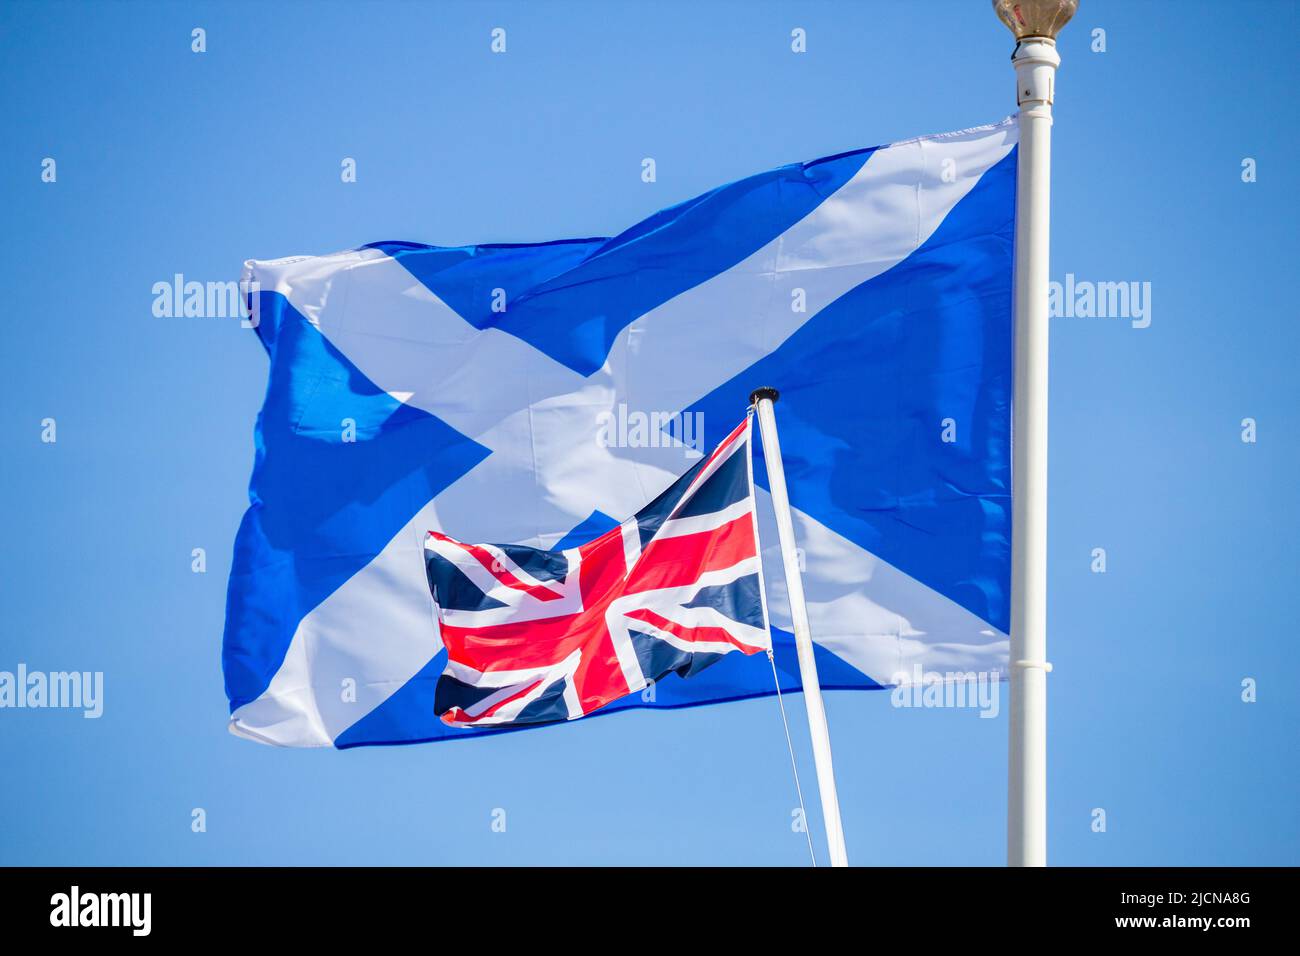 Escocia independencia, frontera dura... imagen conceptual Foto de stock